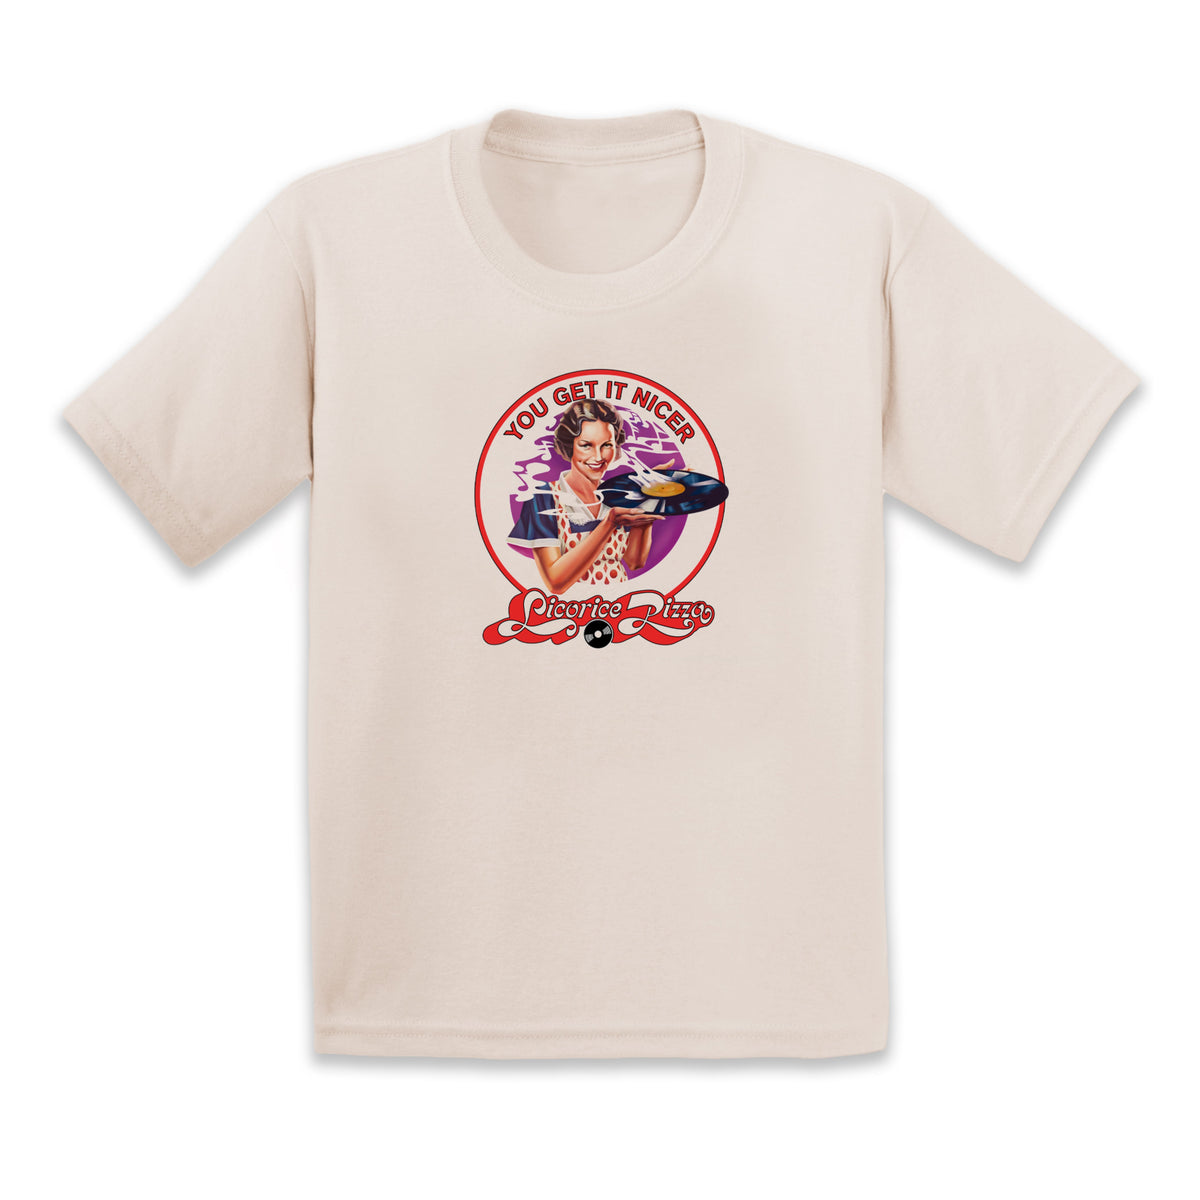 L7 GOLD Vinyl + Classic Licorice Pizza, Cream T-Shirt